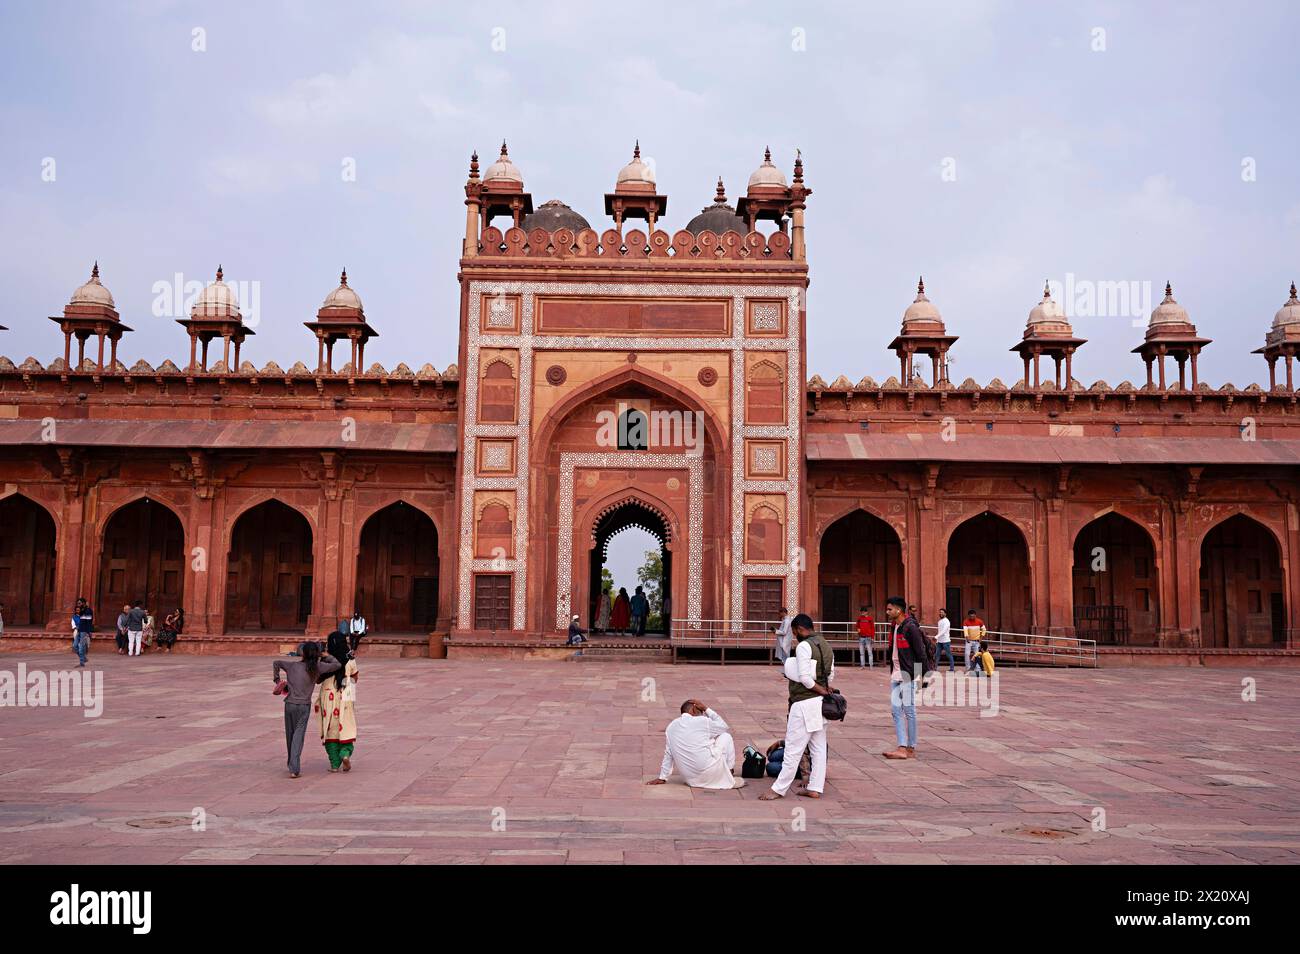 King's Gate and Jama Masjid courtyard, Fatehpur Sikri, Uttar Pradesh, India Stock Photo